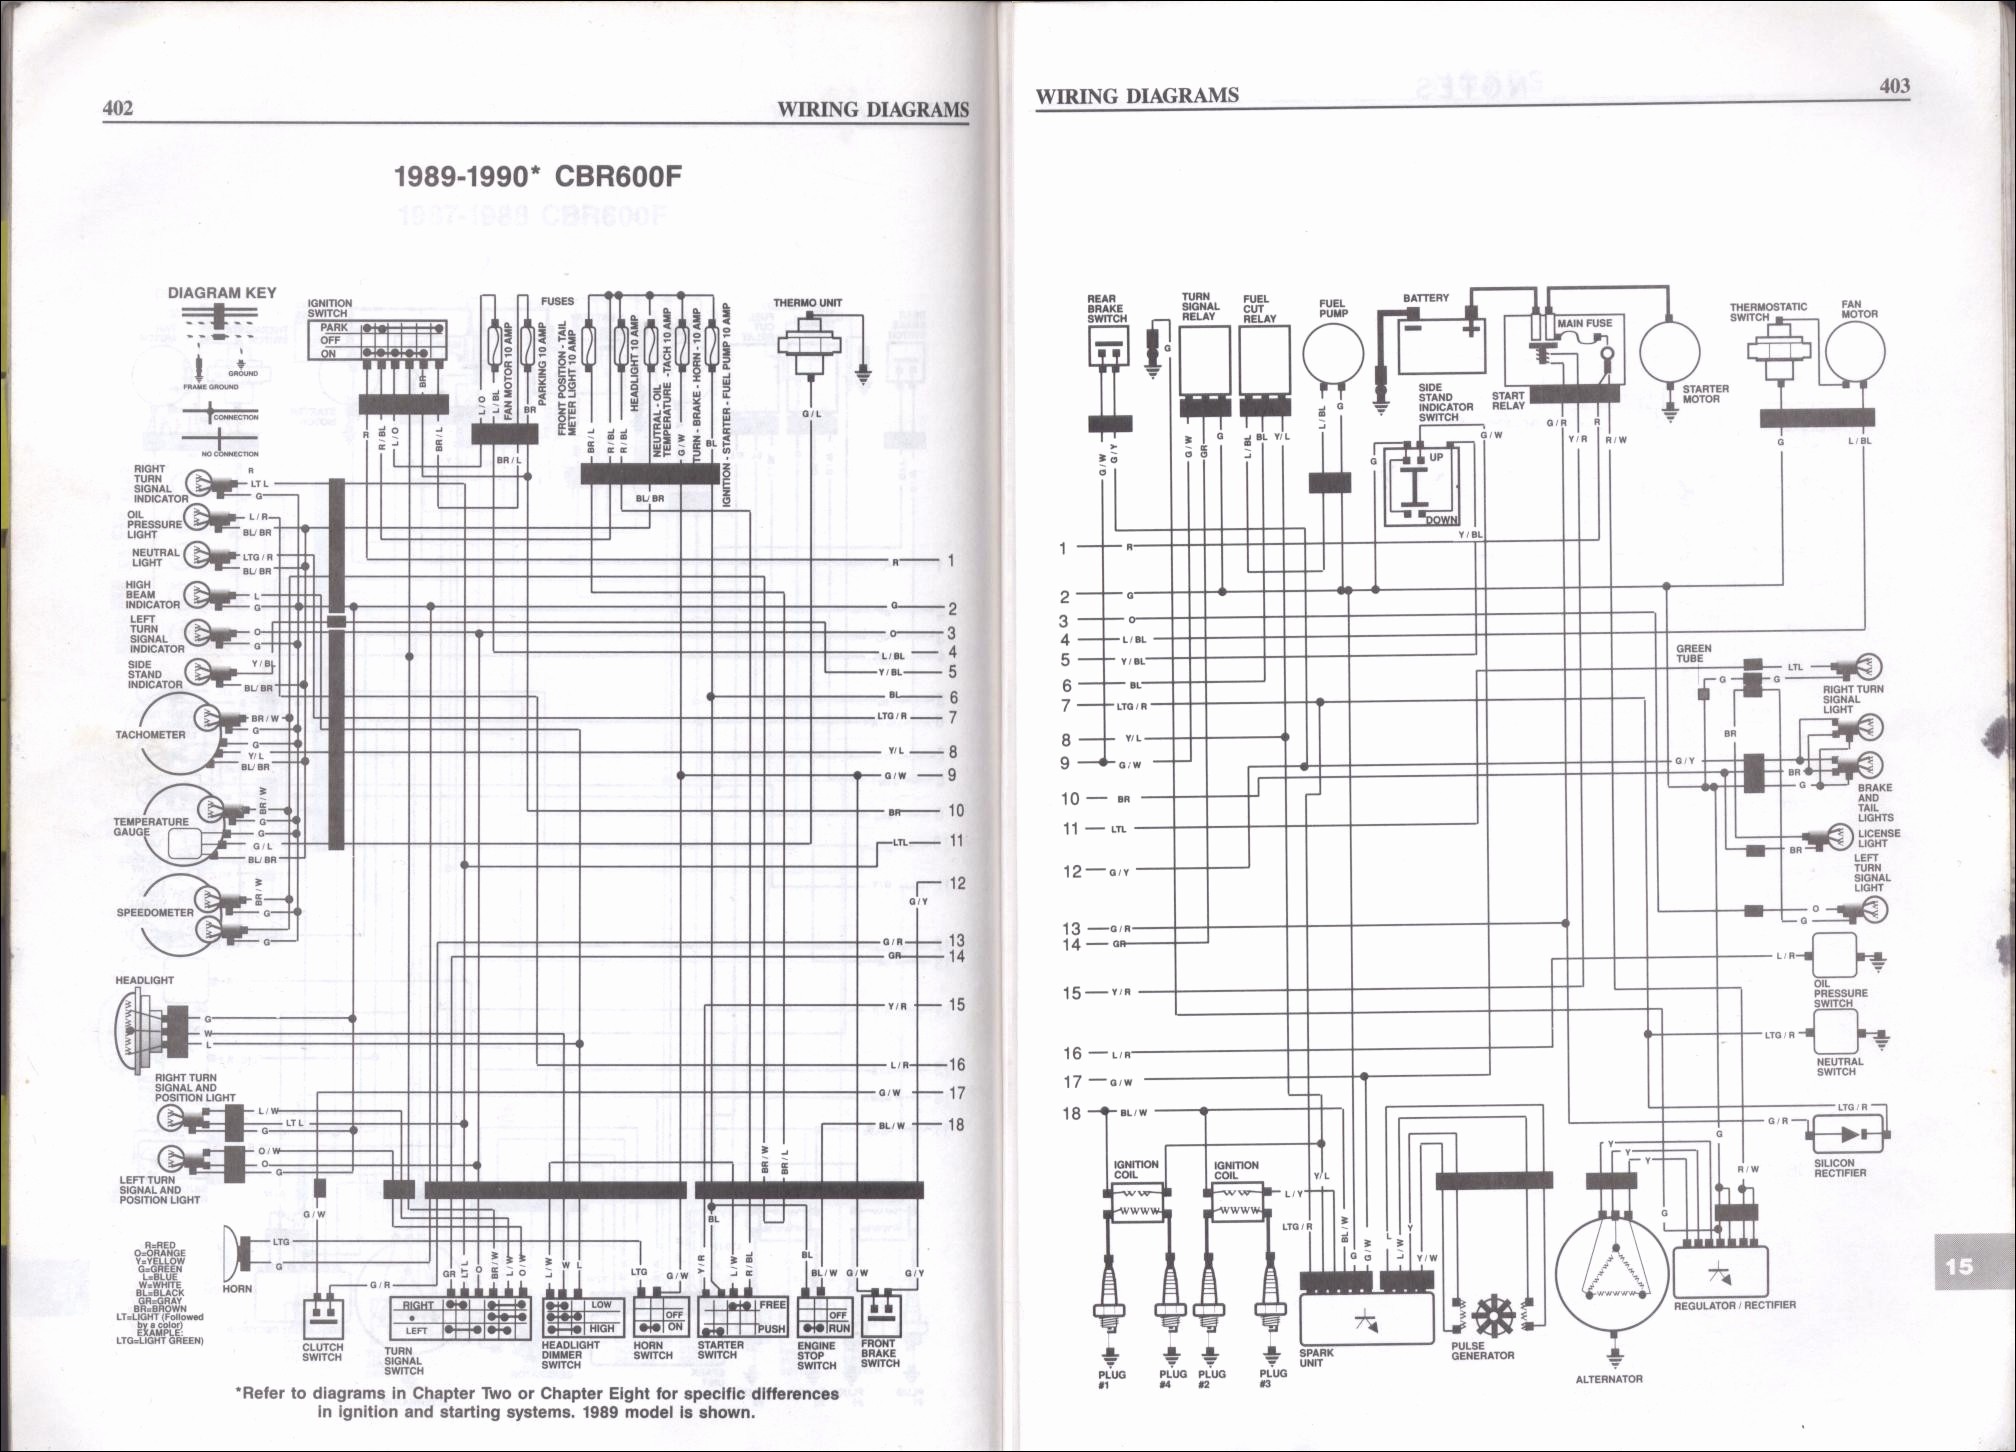 wiring diagram program wiring diagram software new wiring diagram honda c70 inspirationa index 0 0d 9g